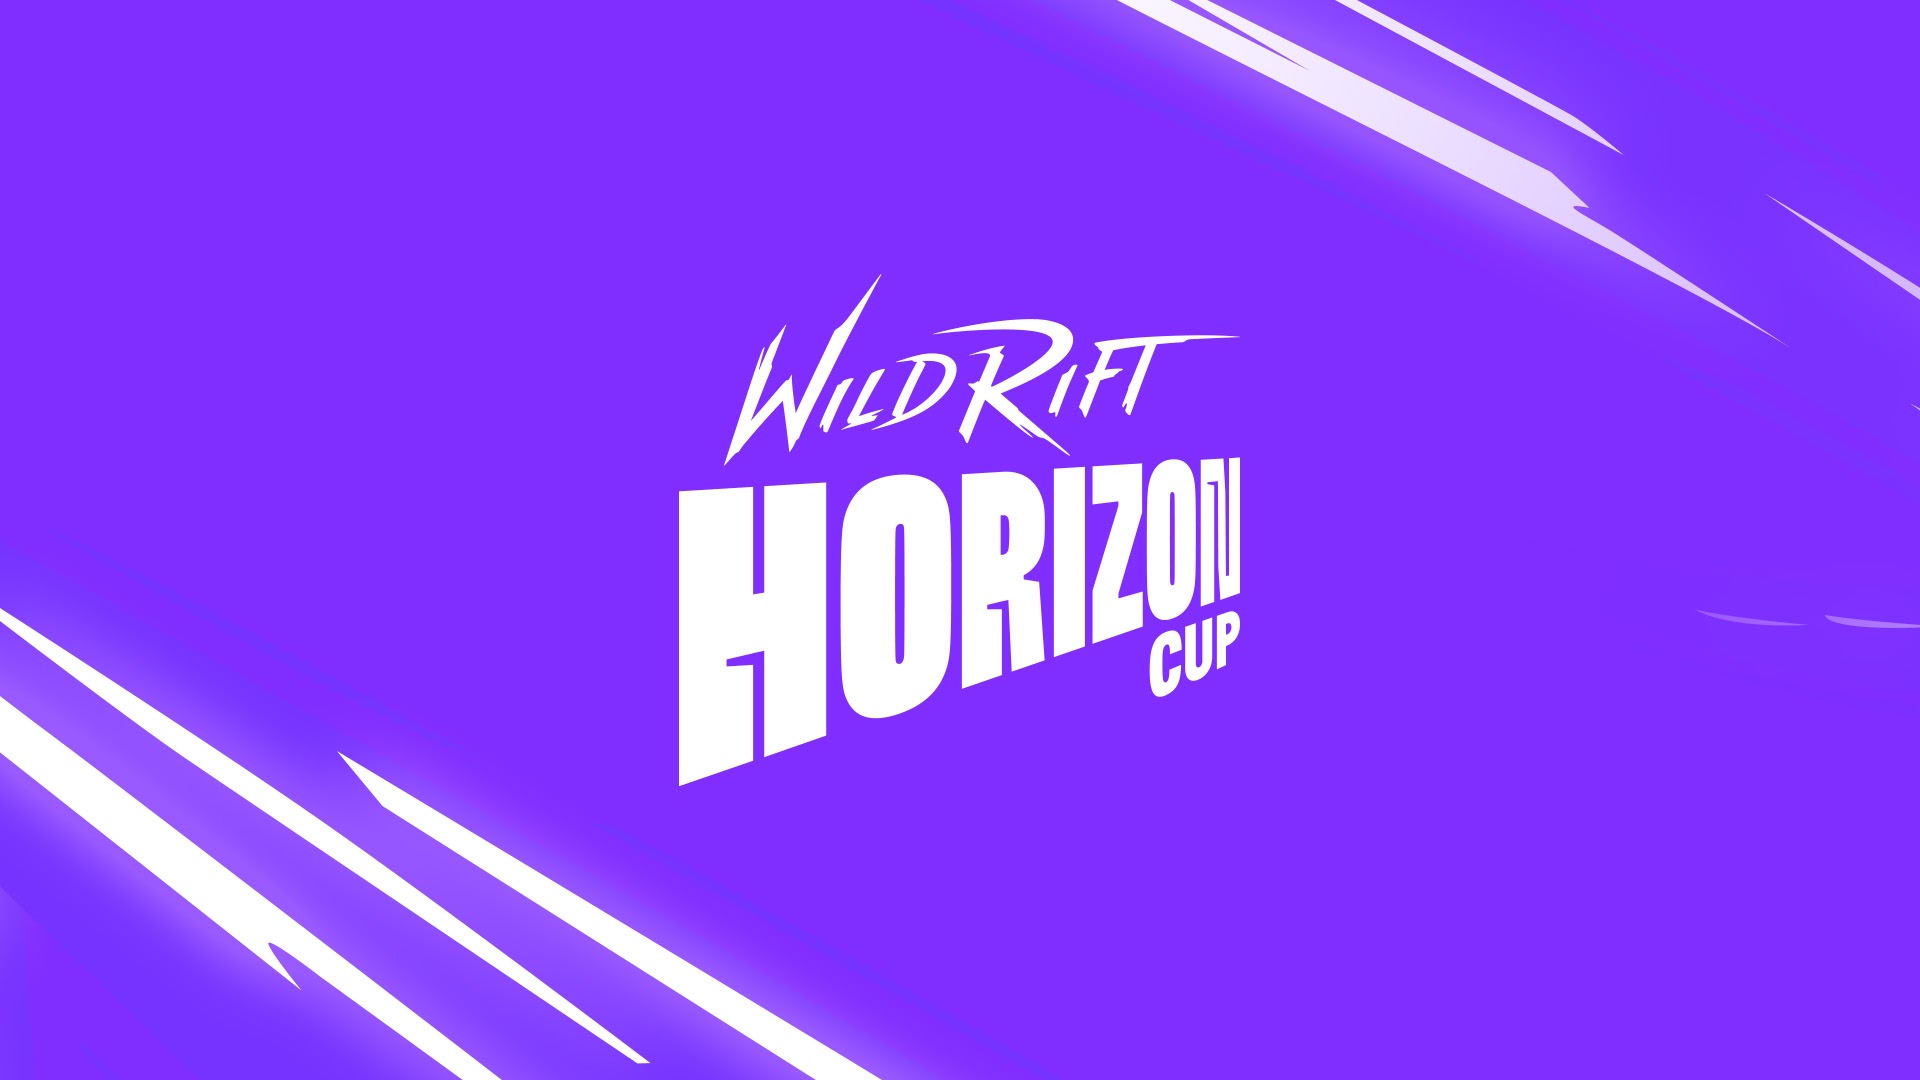 Wild Rift Horizon Cup